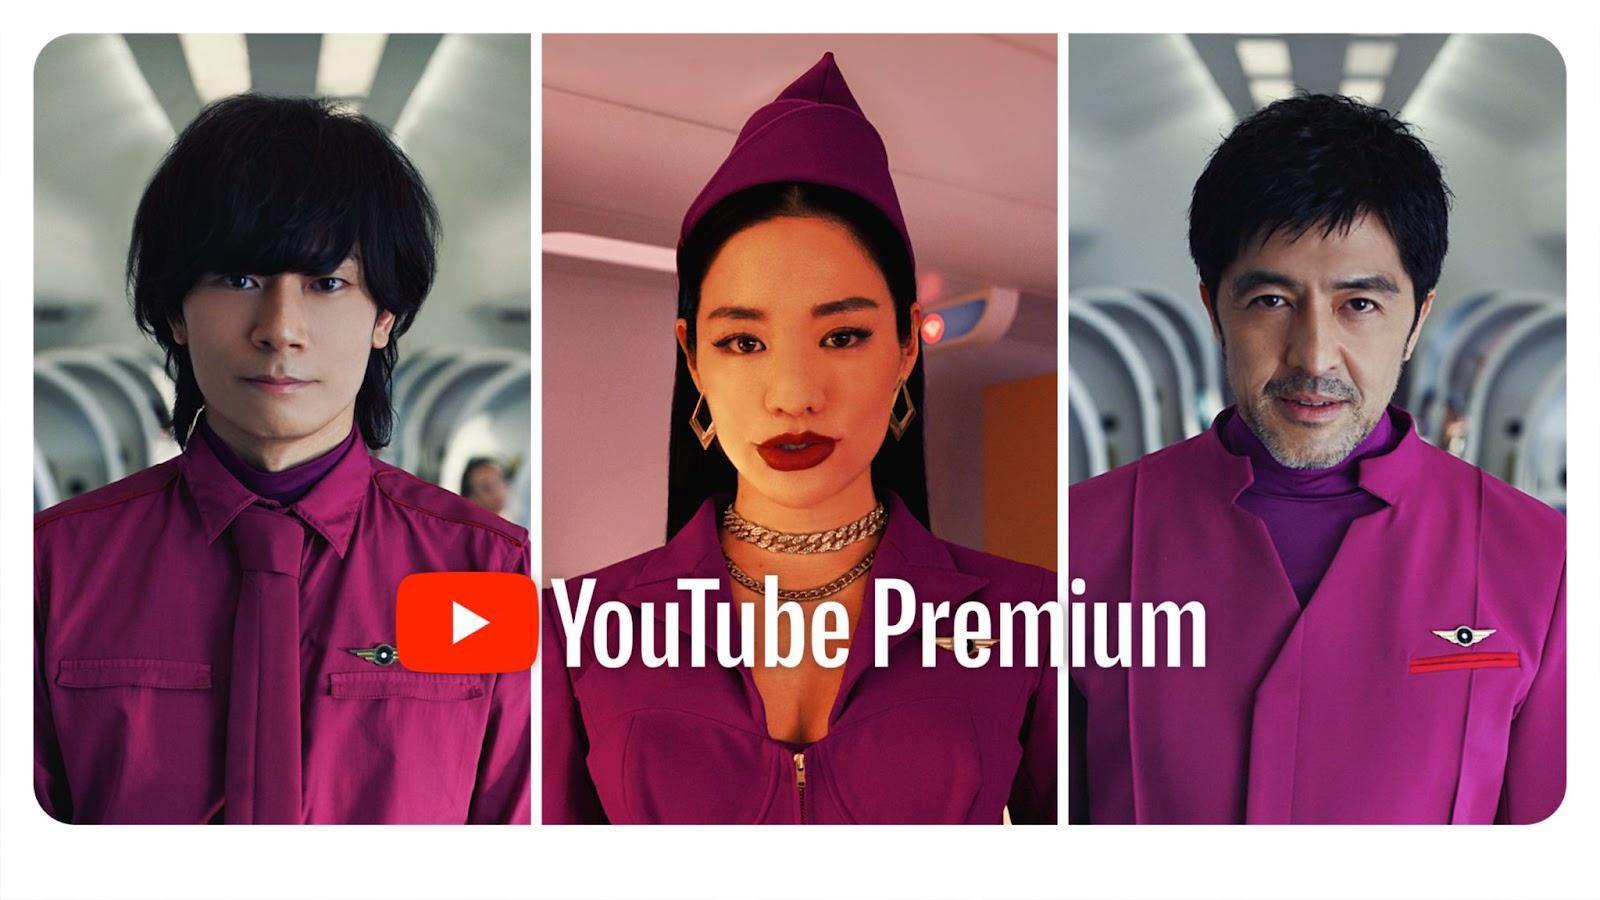 YouTube Premium Campaign